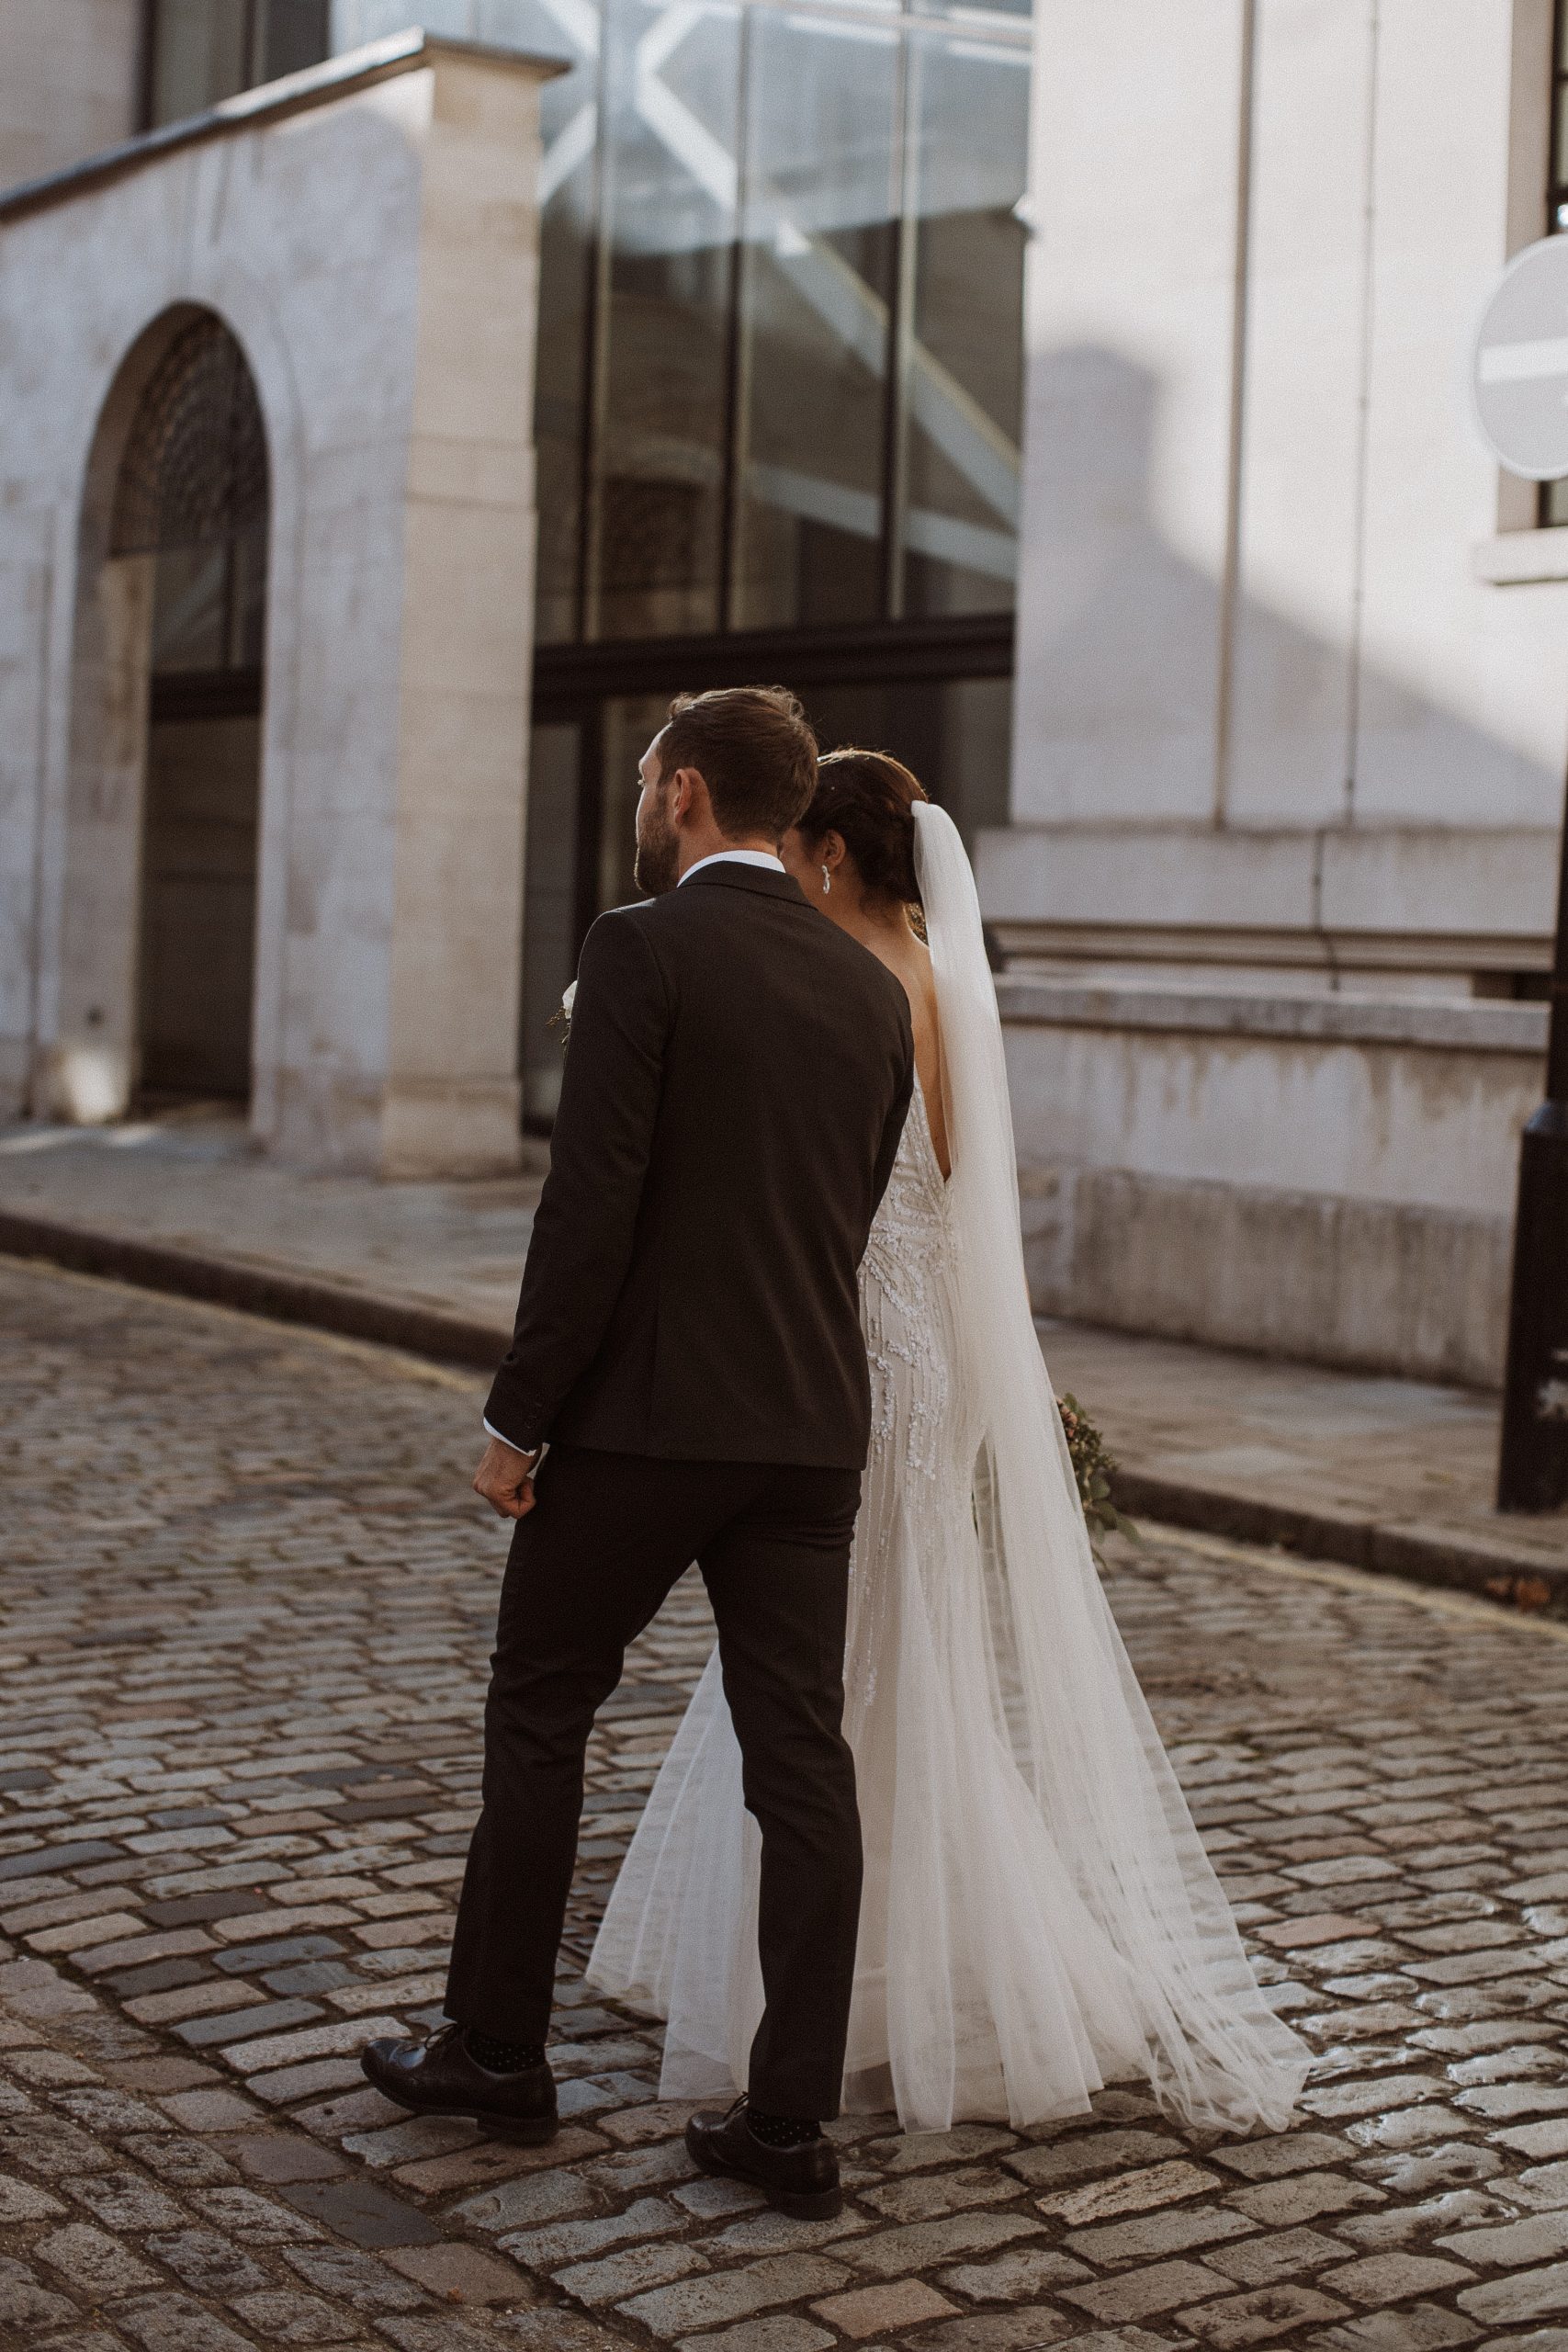 Alex Wysocki Photography – London & Destination Wedding Photographer